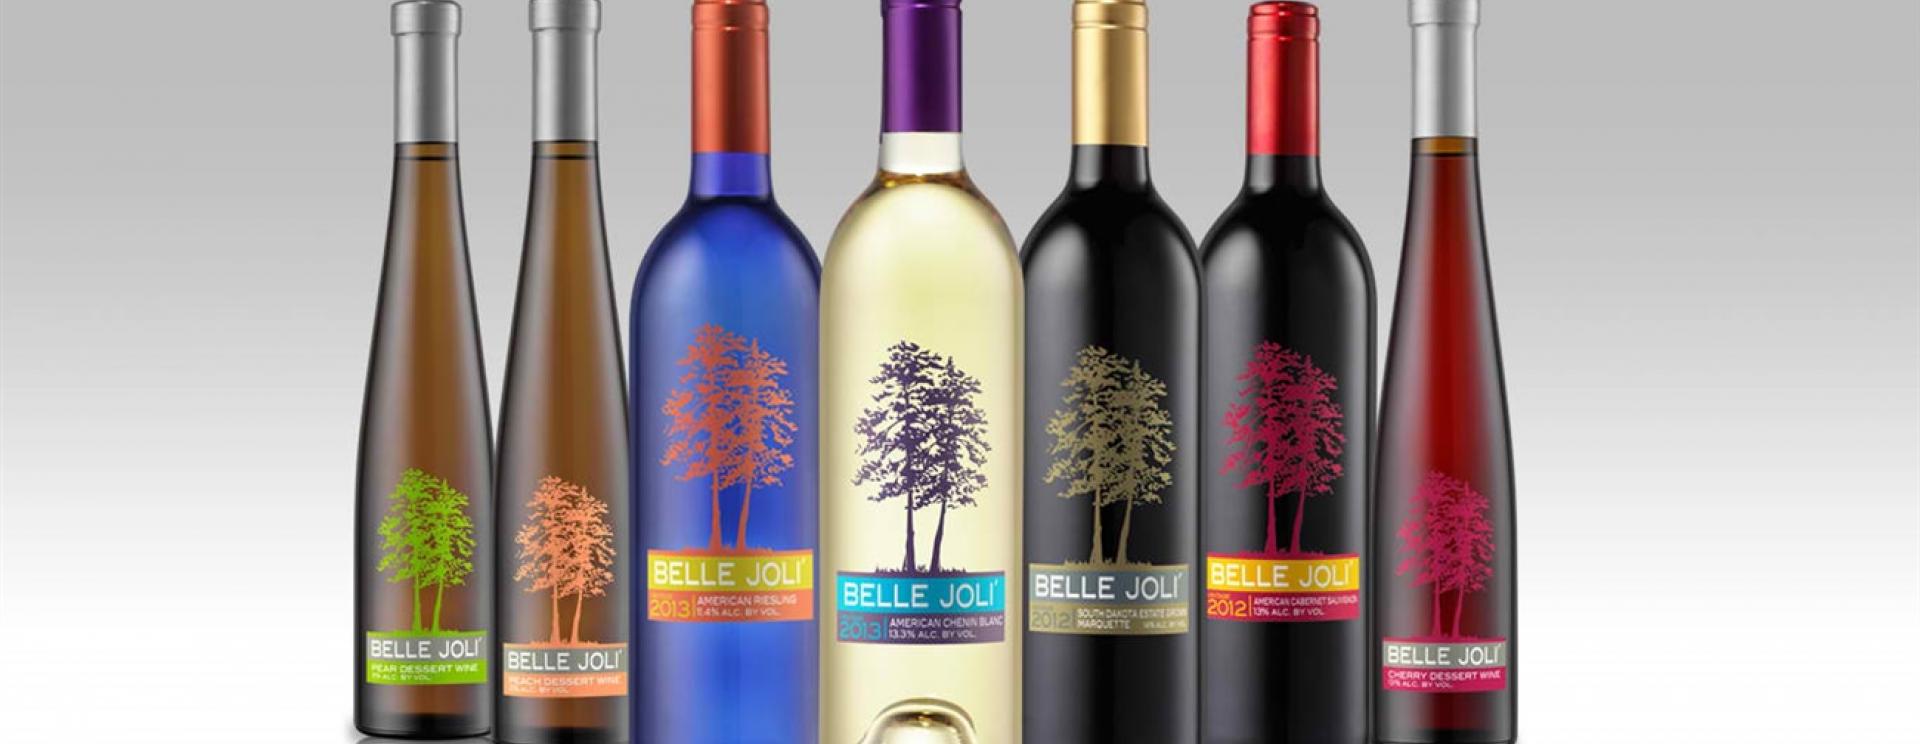 Belle Joli Winery Sparkling House